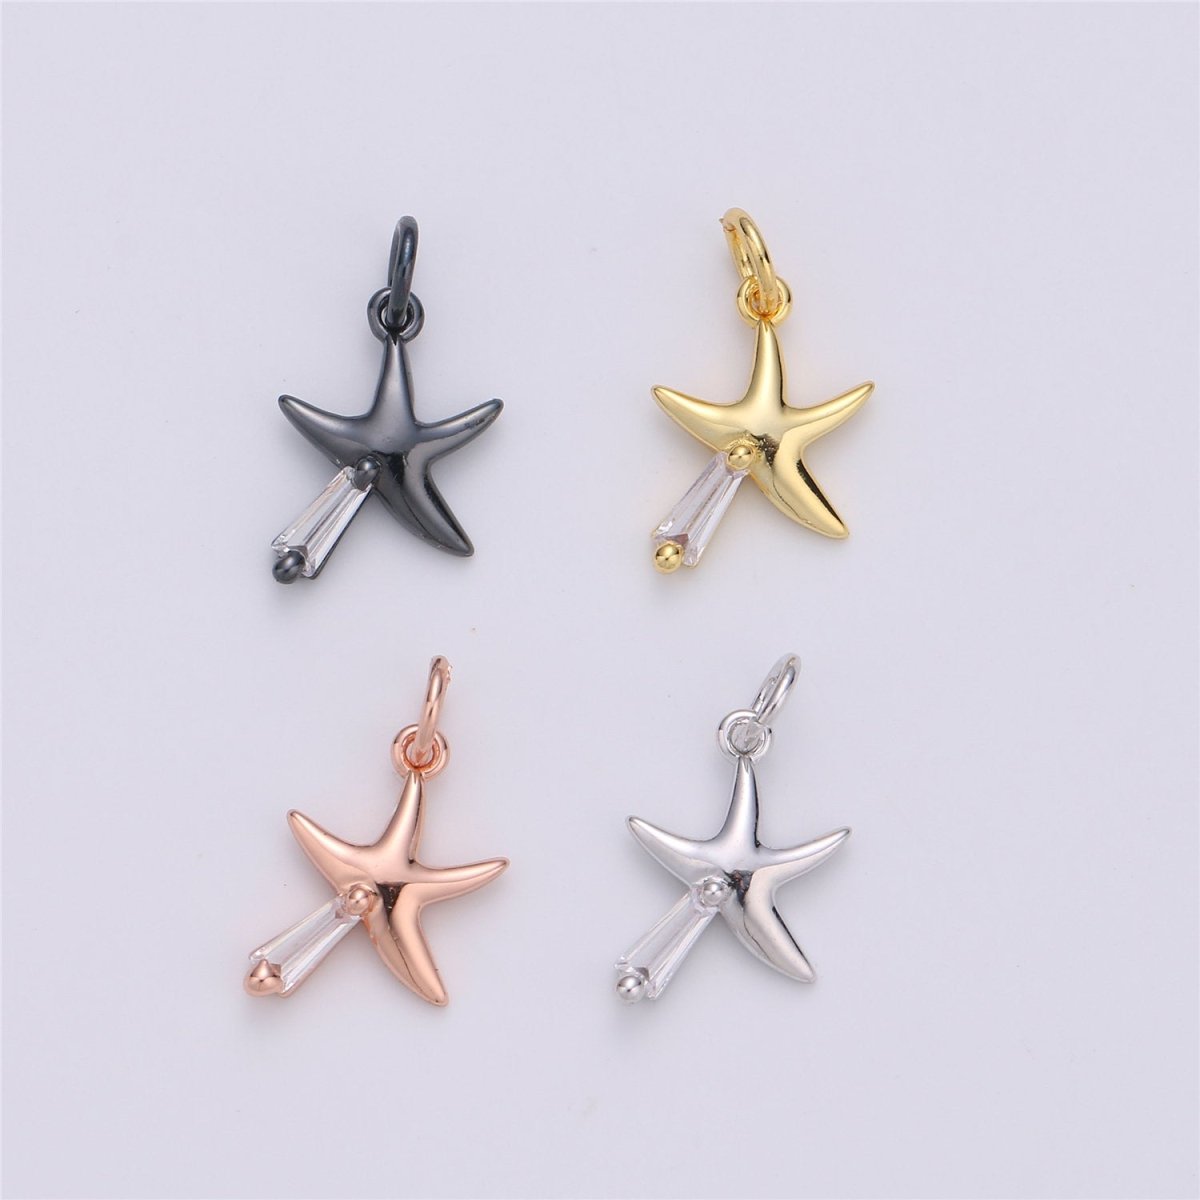 Dainty 24K Gold Filled Star charm 14x9mm CZ Cubic Black Silver Rose Gold Star Fish Pendant Celestial Jewelry Minimalist charm, D-003 TO D-006 - DLUXCA